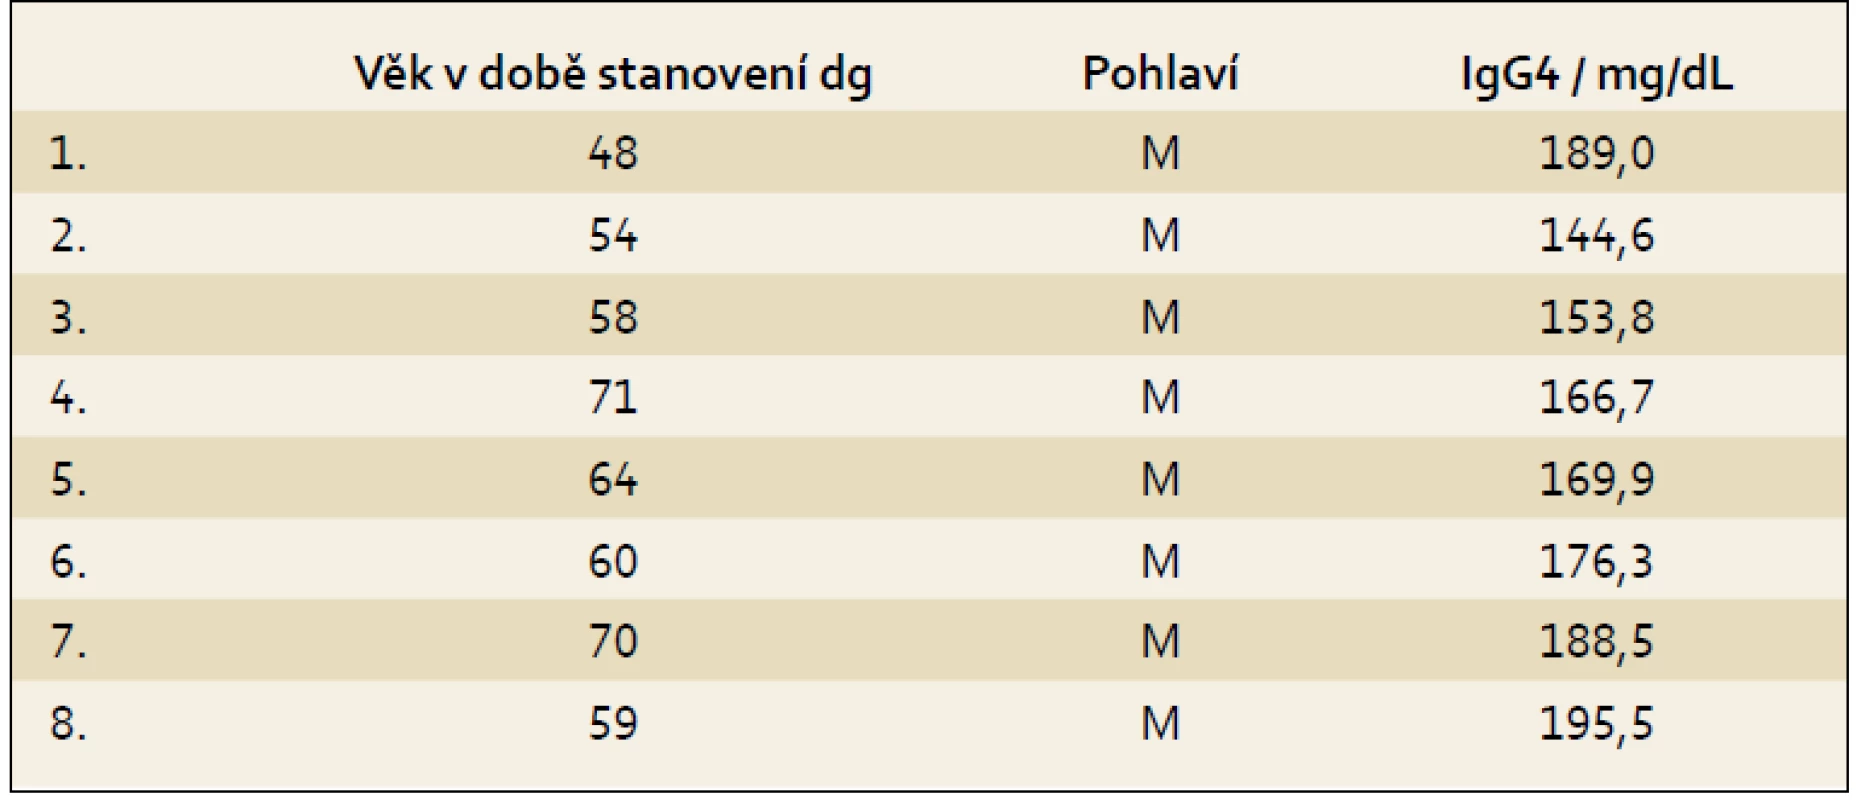 Pankreatický adenokarcinom a zvyšená hodnota IgG4.
Tab. 1. Pancreatic adenocarcinoma and increased IgG4.